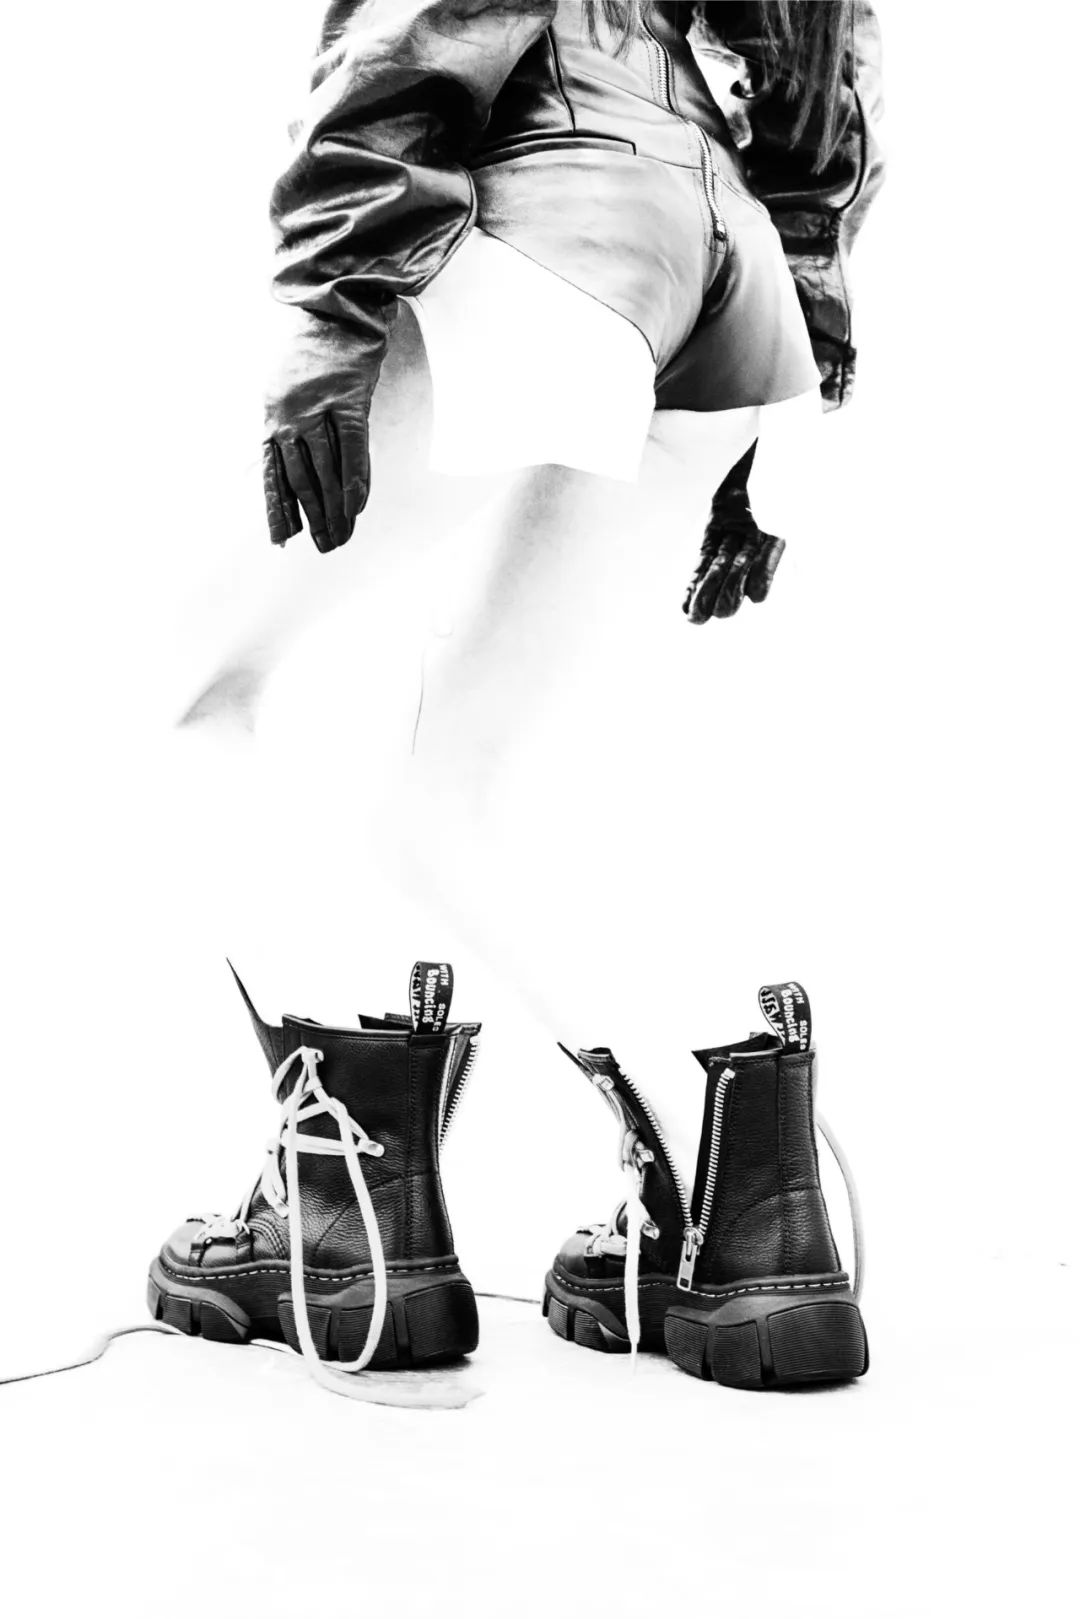 Lisa同款！「Rick Owens x 马丁靴」新联名曝光，明天发售！